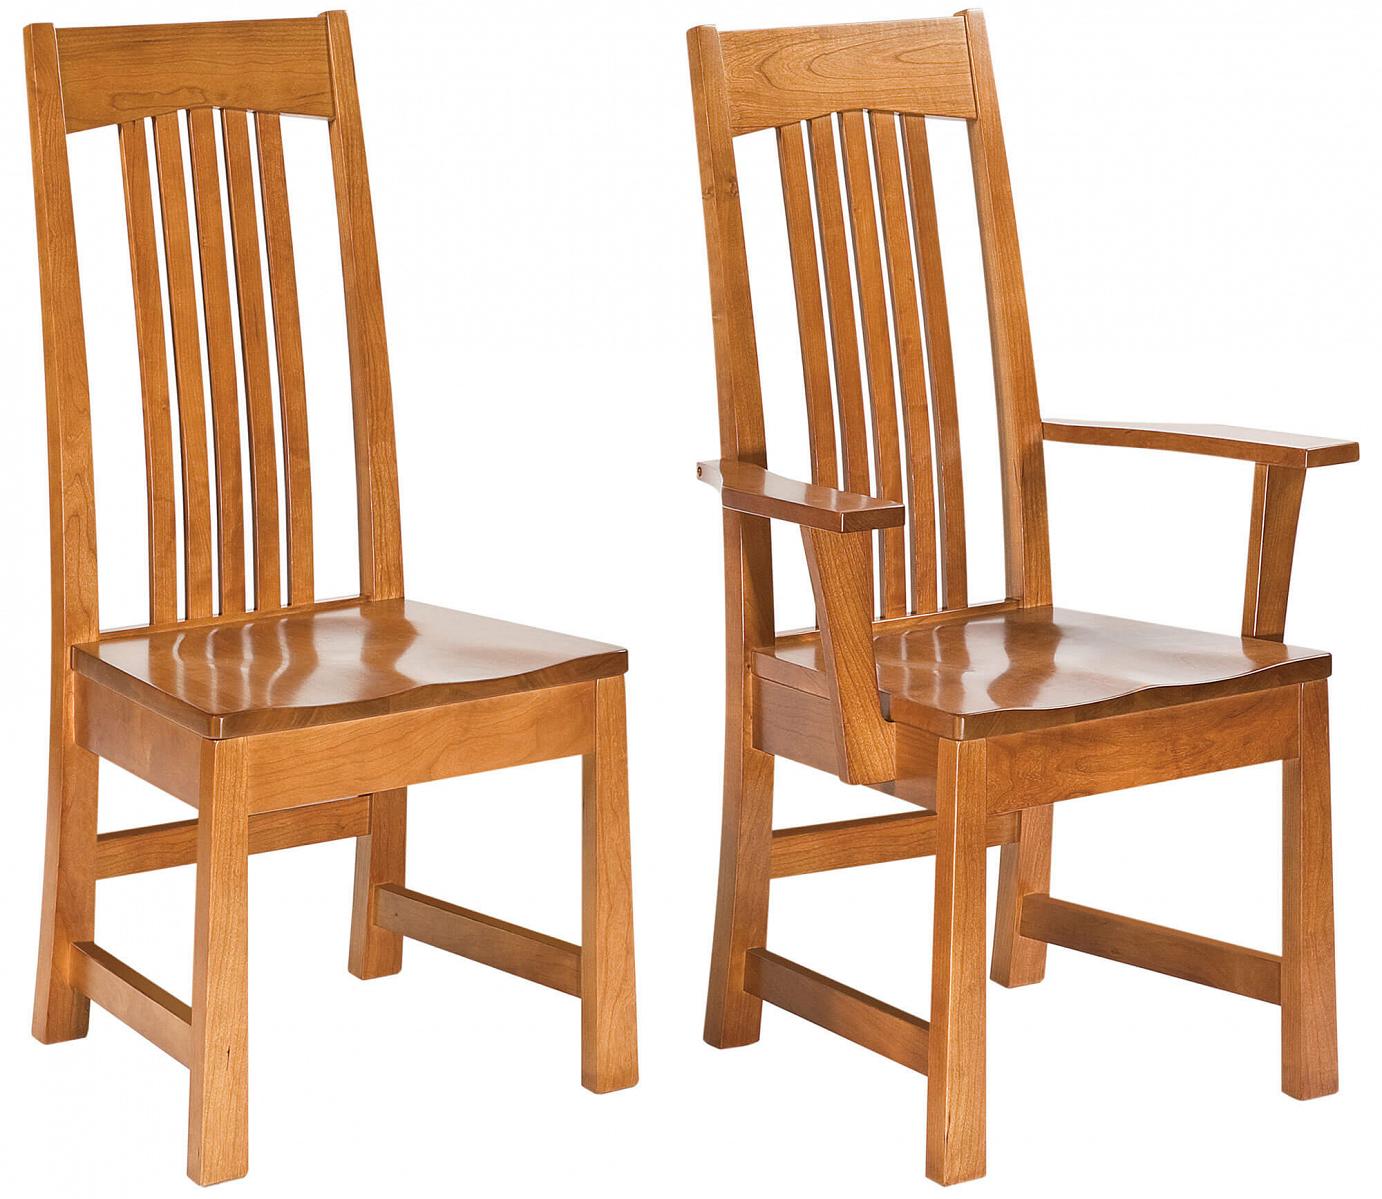 RH Yoder Armani Chairs